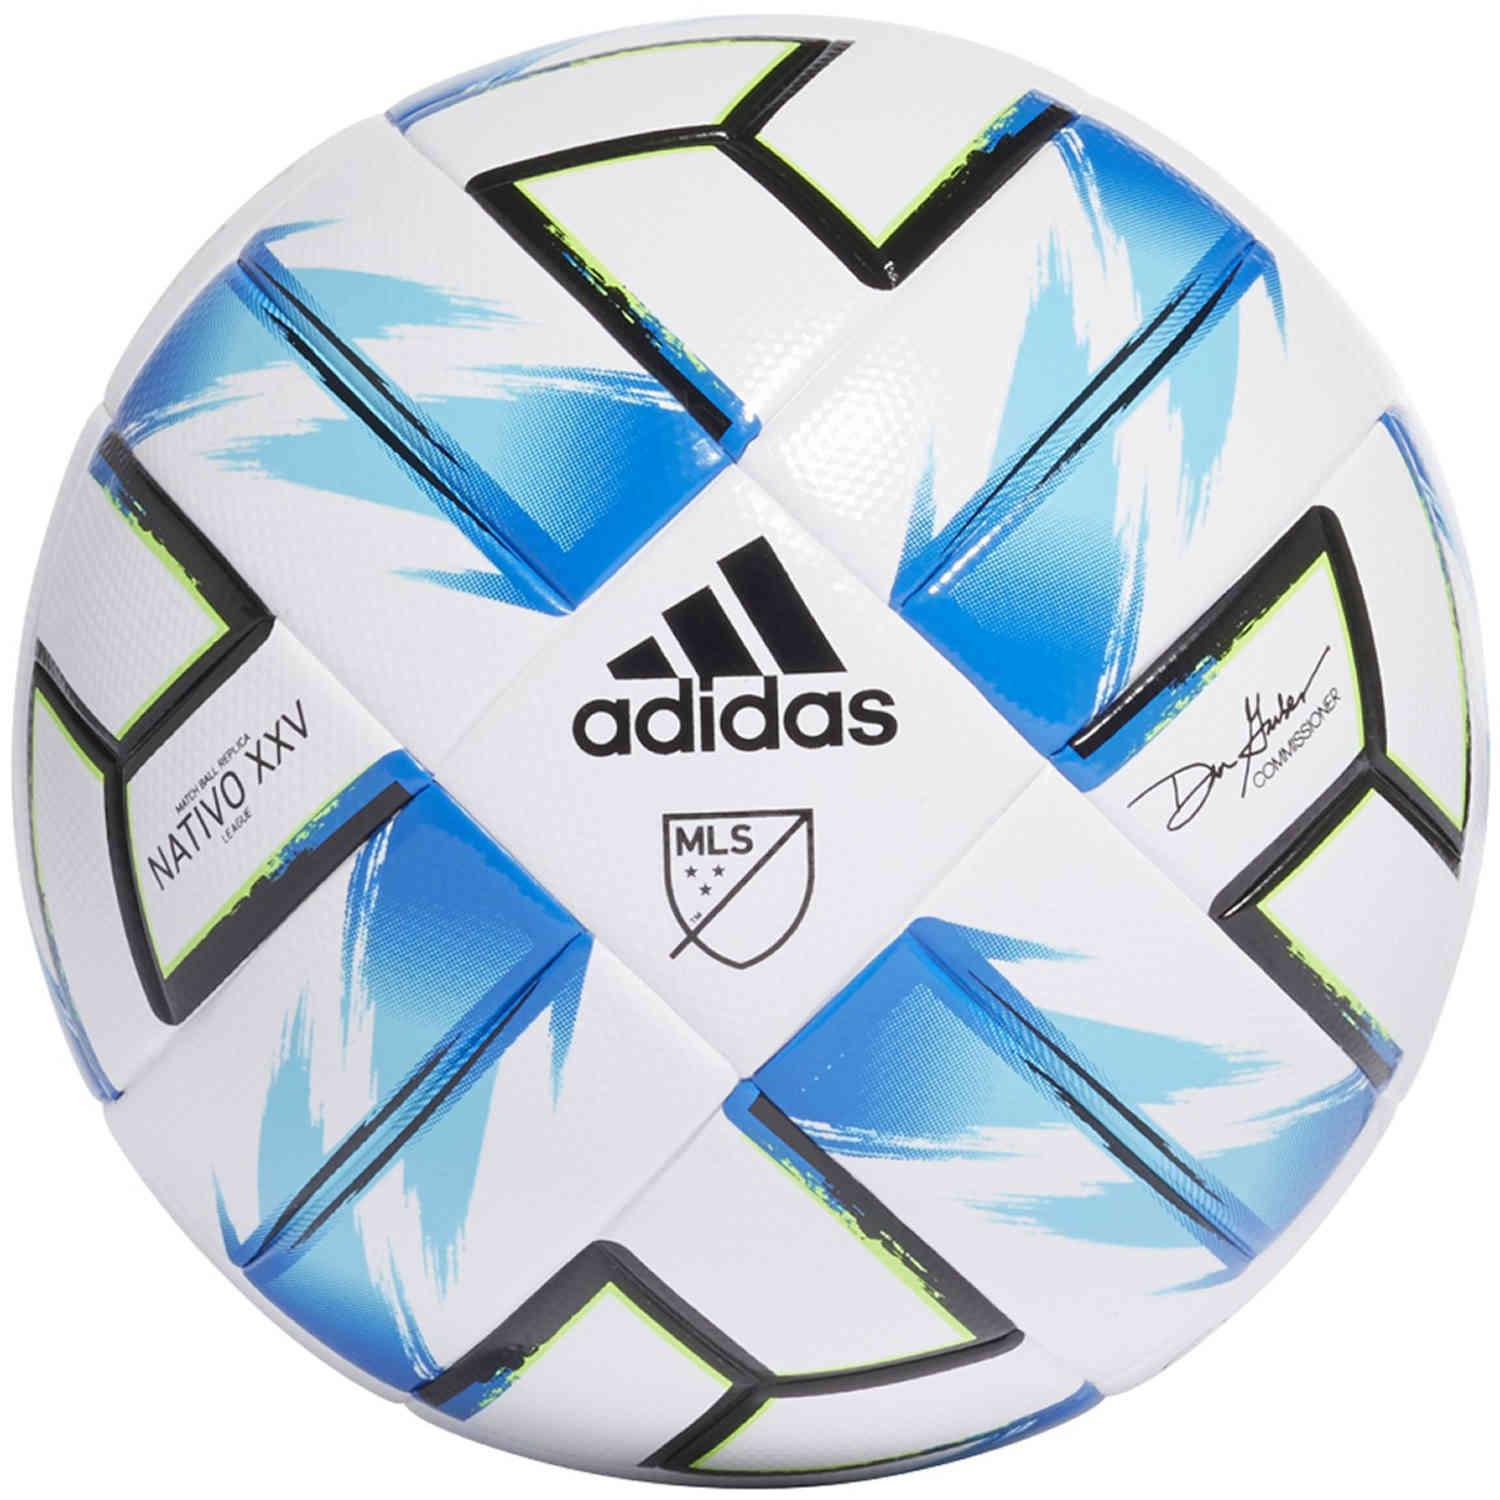 adidas NFHS MLS League Soccer Ball - 2020 - SoccerPro